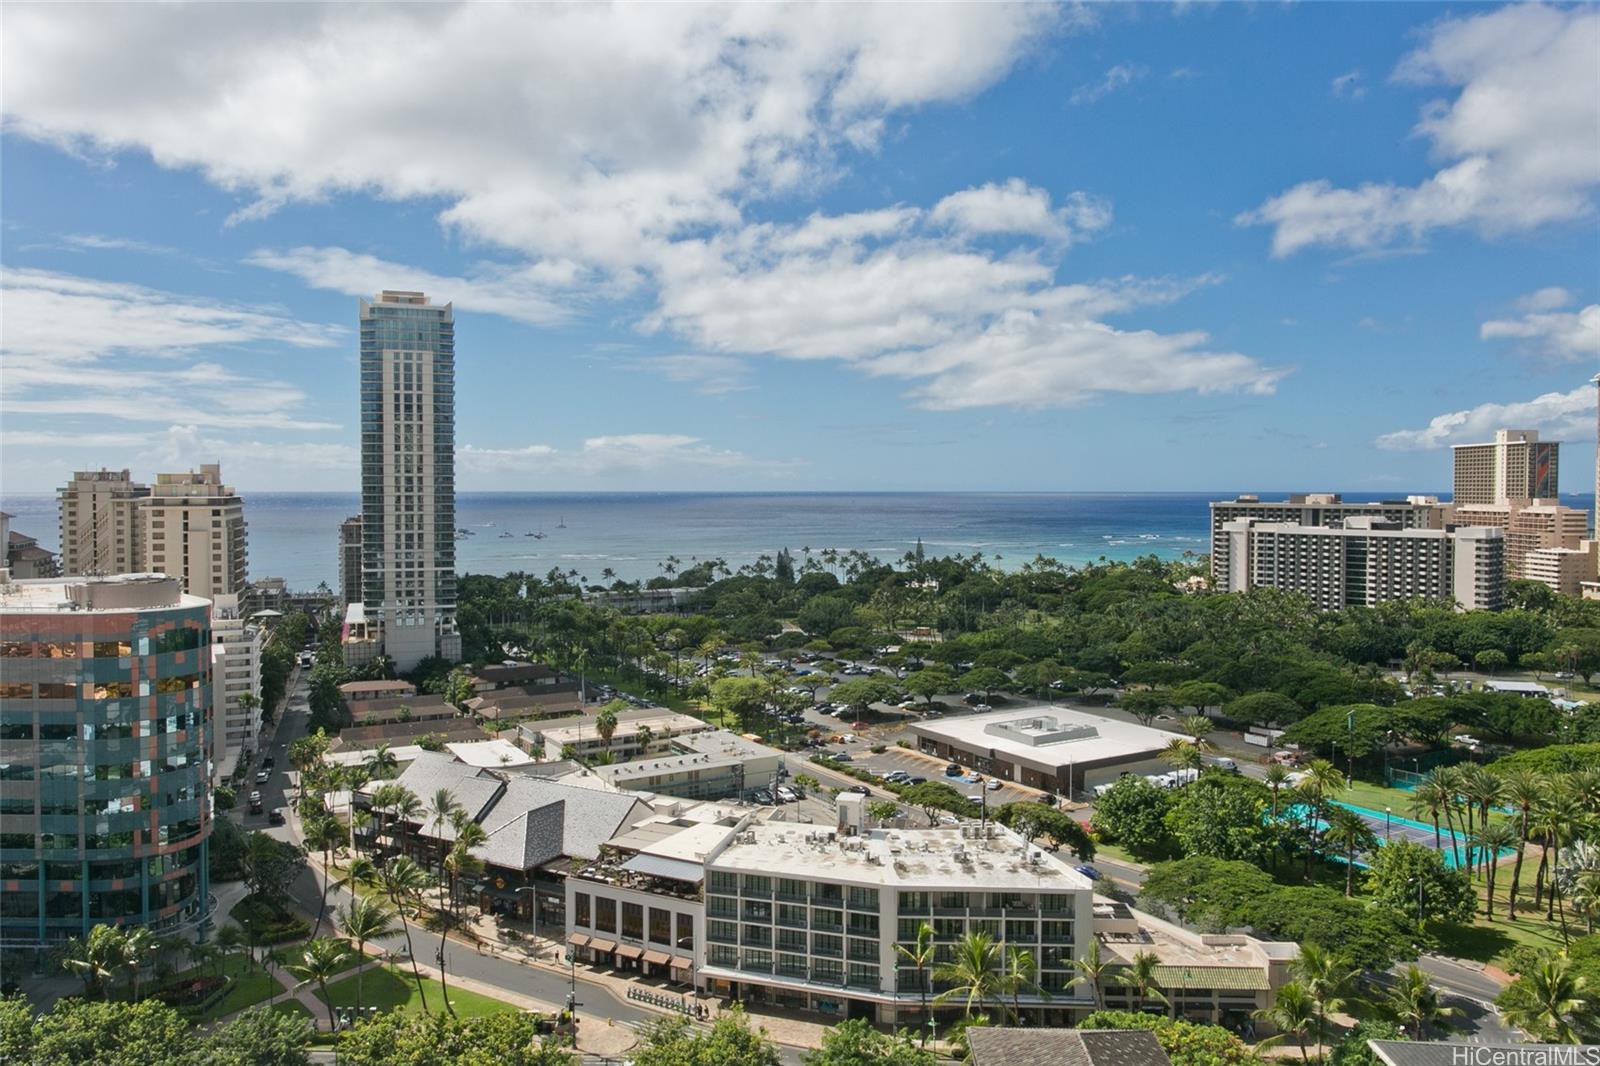 The Ritz-Carlton Residences Twr 2 - 383 Kalaimoku 2139 Kuhio Avenue #D2103, Honolulu, HI 96815